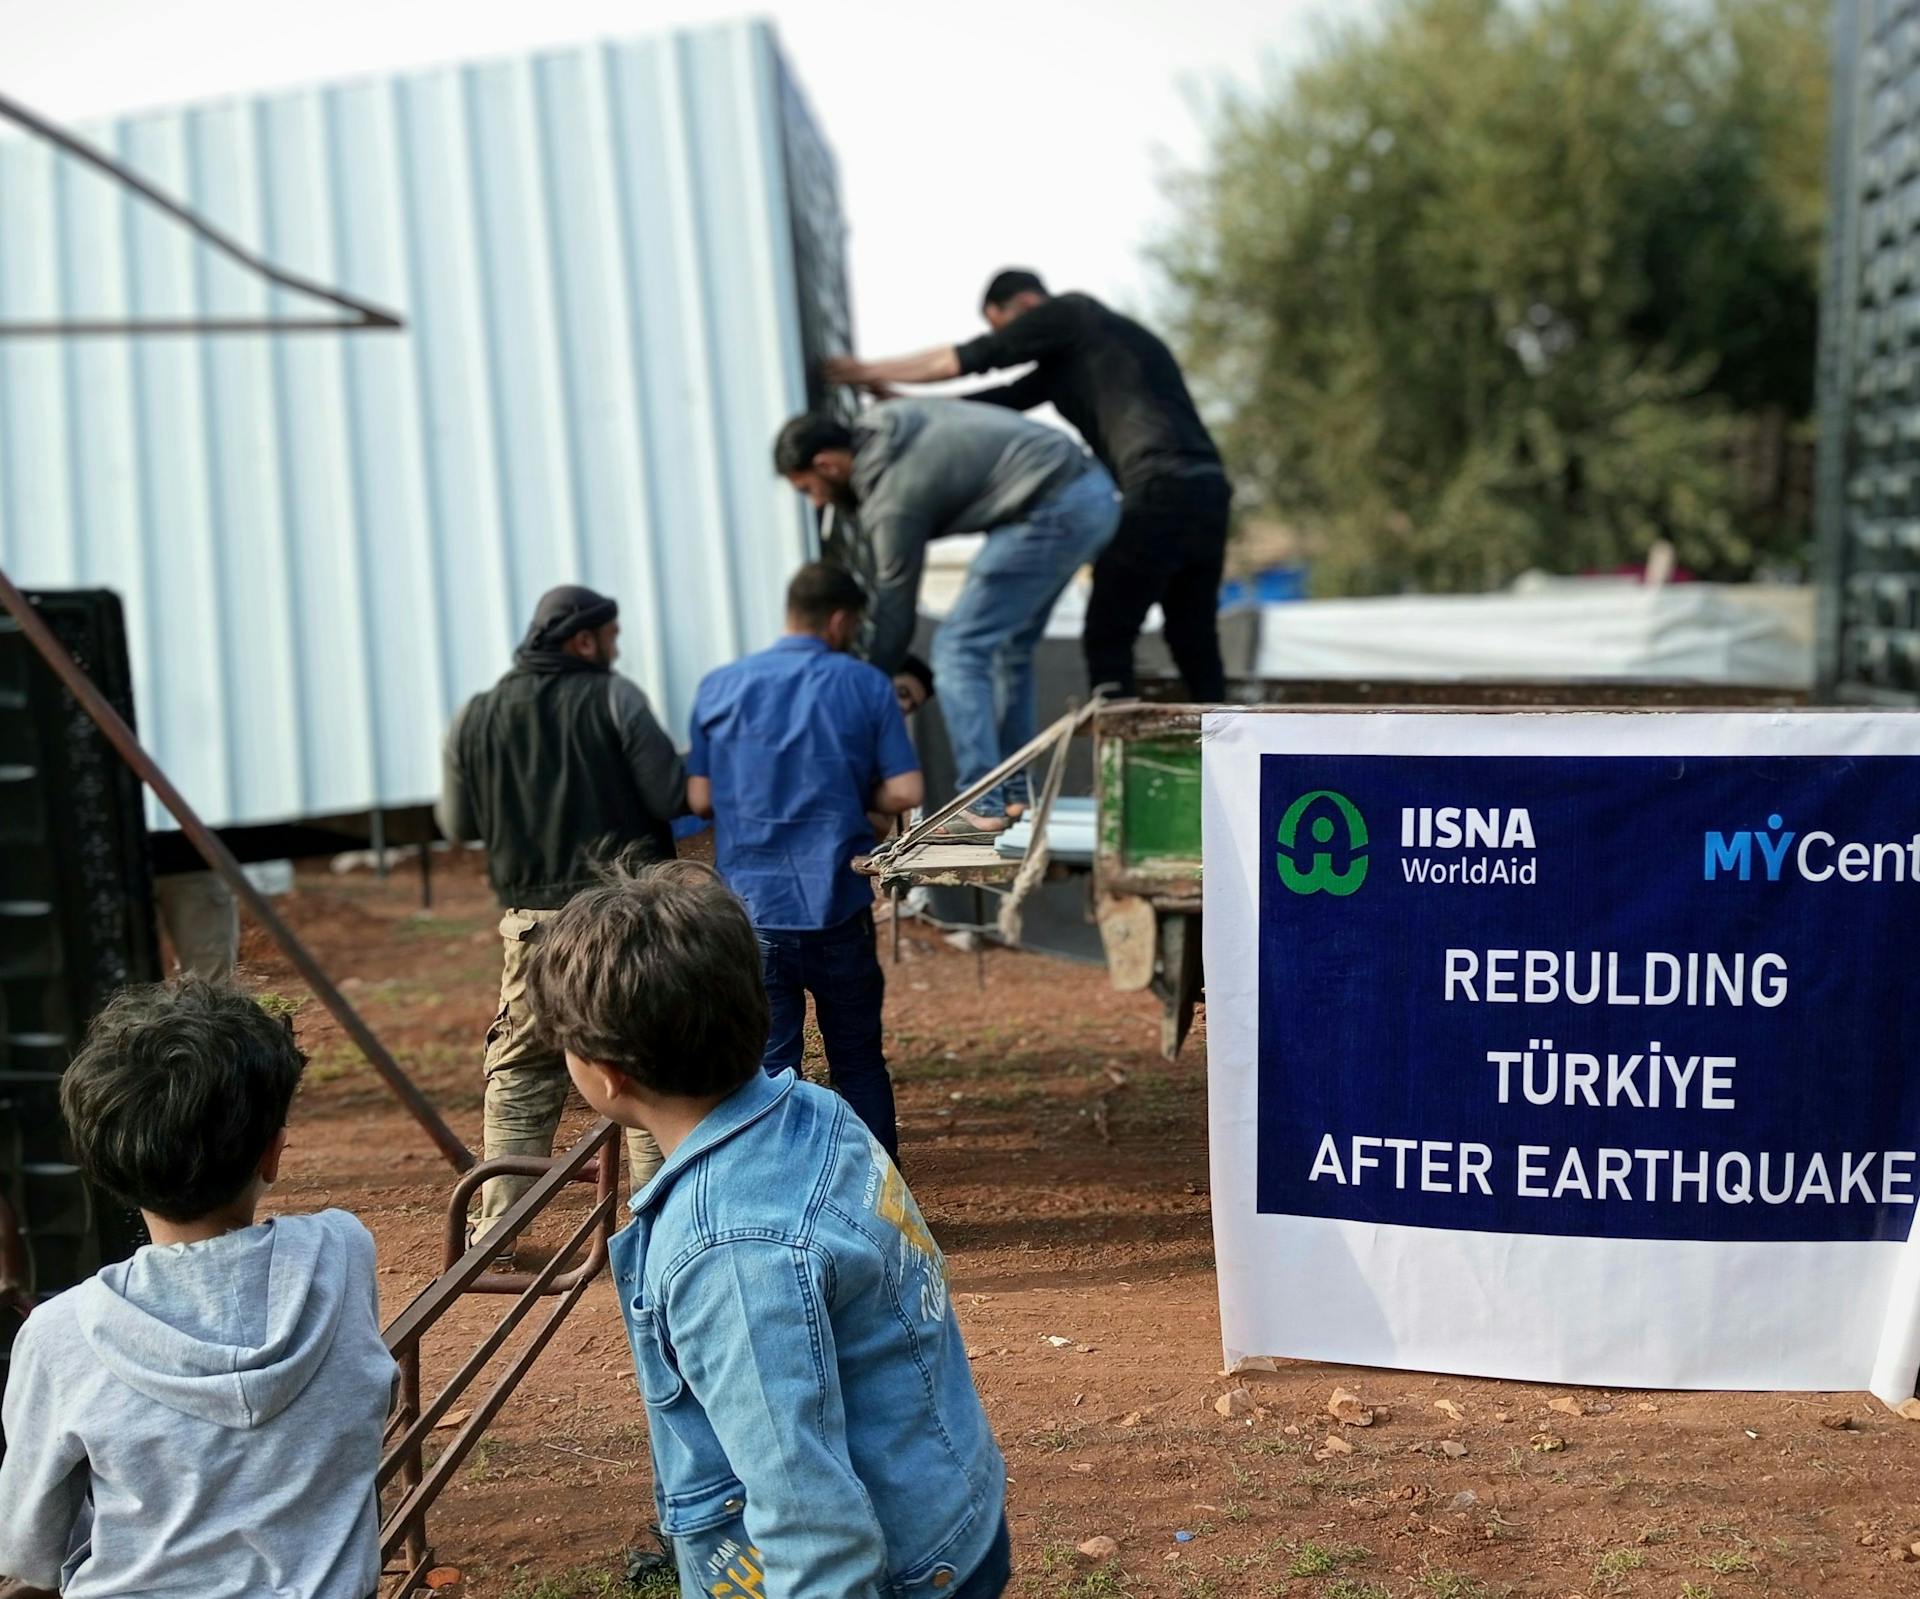 IISNA World Aid Assistance for Syria and Turkiye Earthquakes